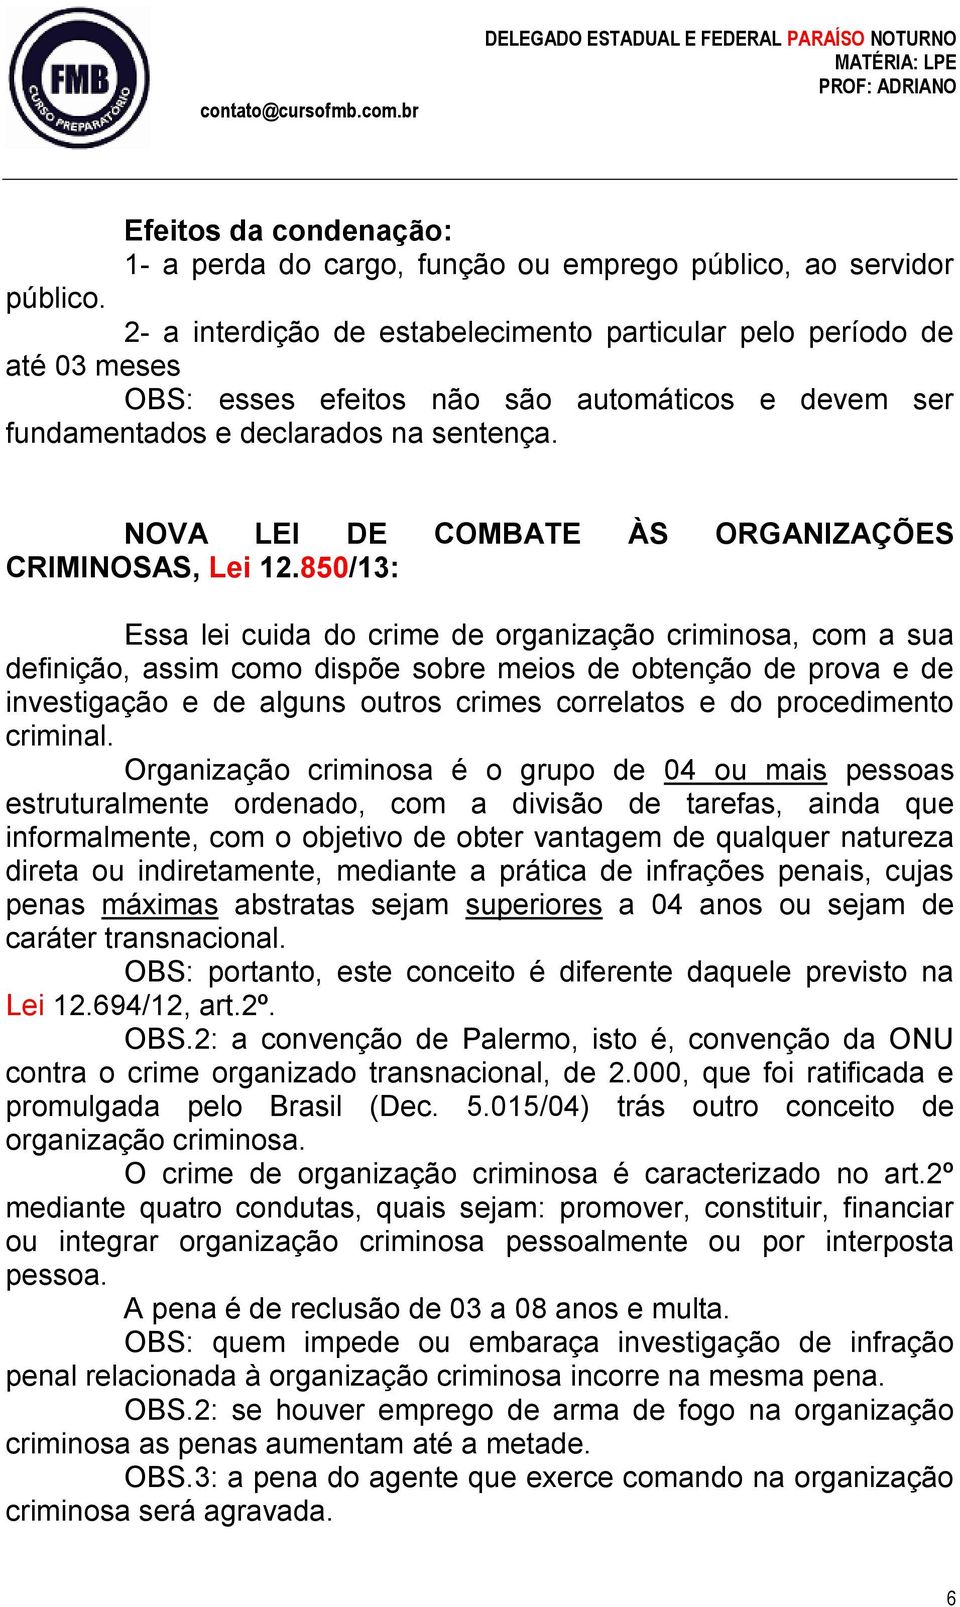 NOVA LEI DE COMBATE ÀS ORGANIZAÇÕES CRIMINOSAS, Lei 12.